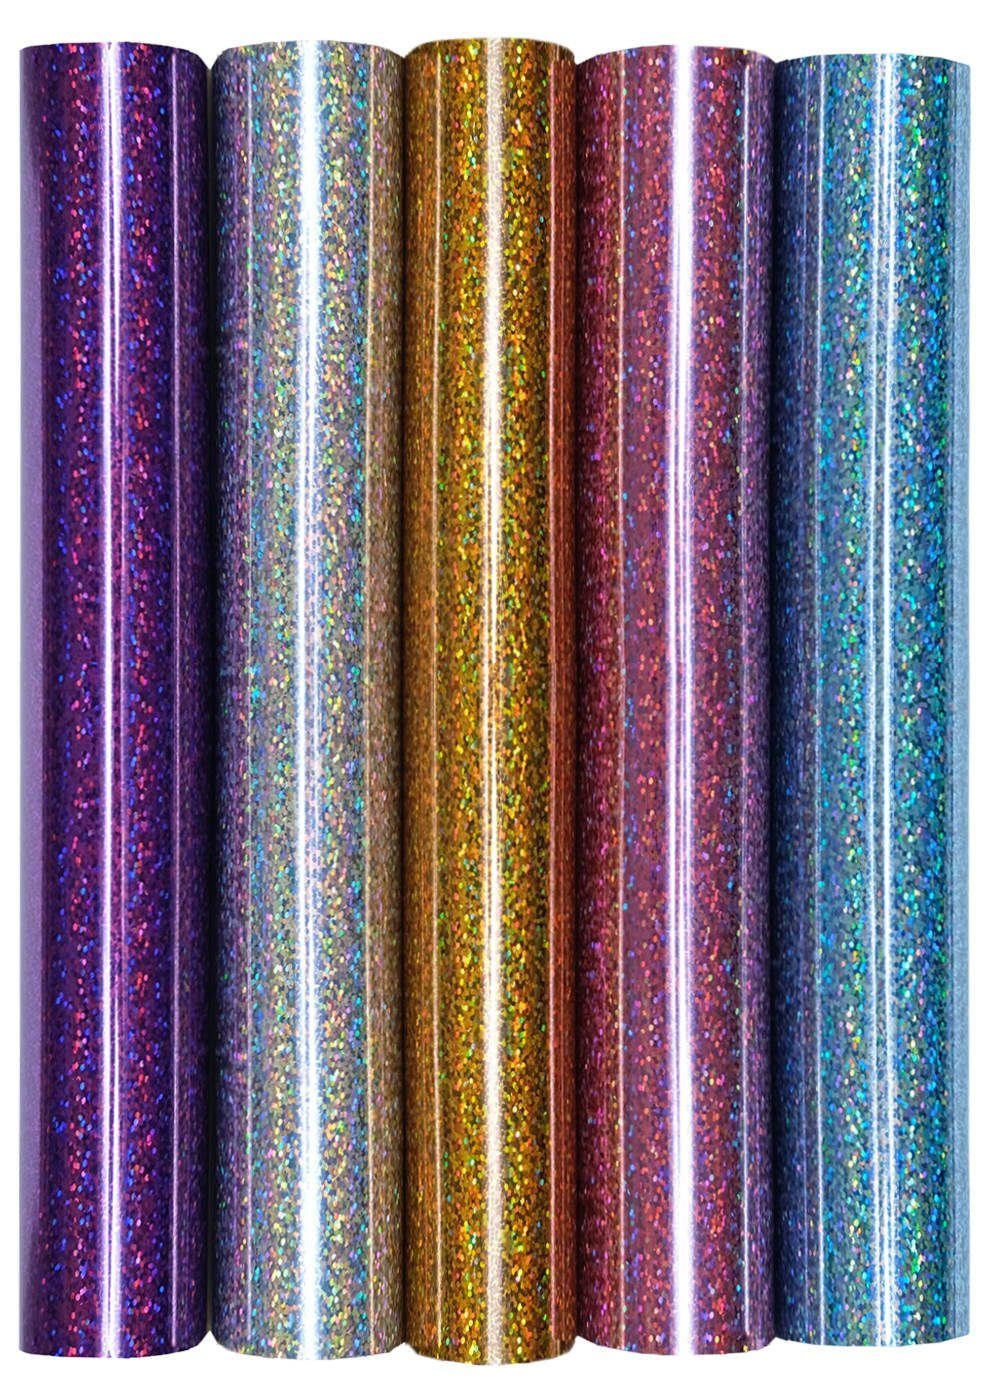 Hilltop Transparentpapier 22er zum Rainbow Aufbügeln Glitzer Set A4 Transferfolie/Textilfolie Multicolor